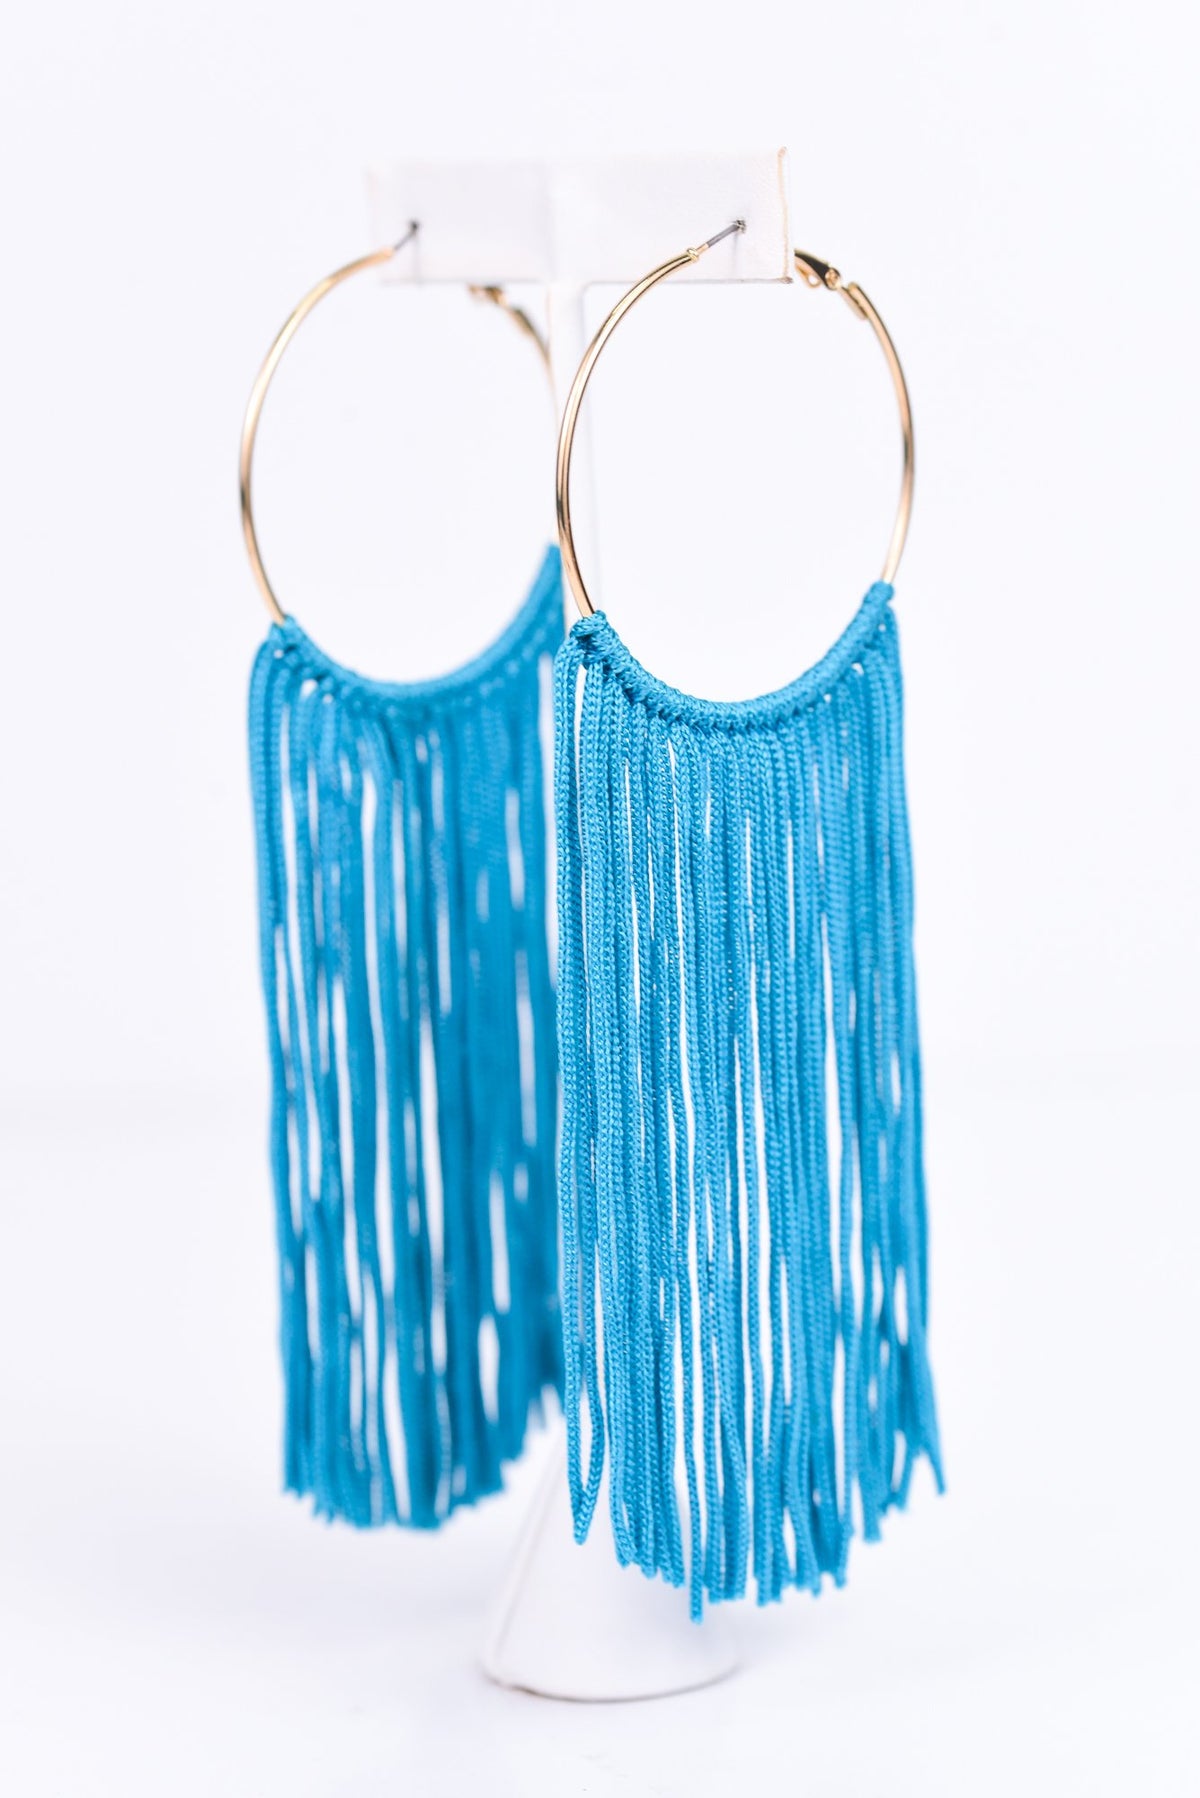 Long Turquoise Tassel Gold Hoop Earrings - EAR2311TU